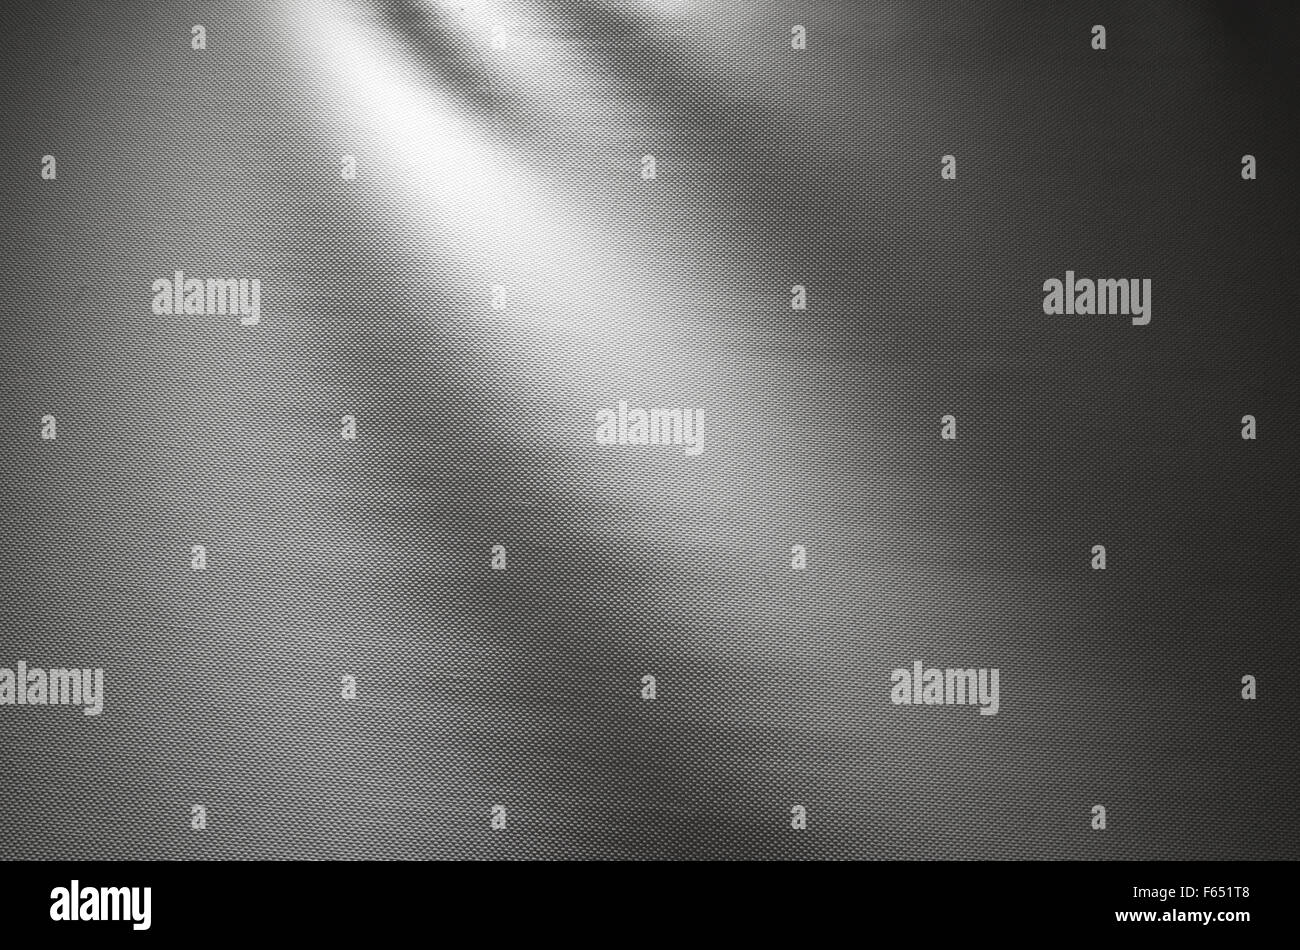 Gray waved fabric background photo texture with spot illumination Stock Photo